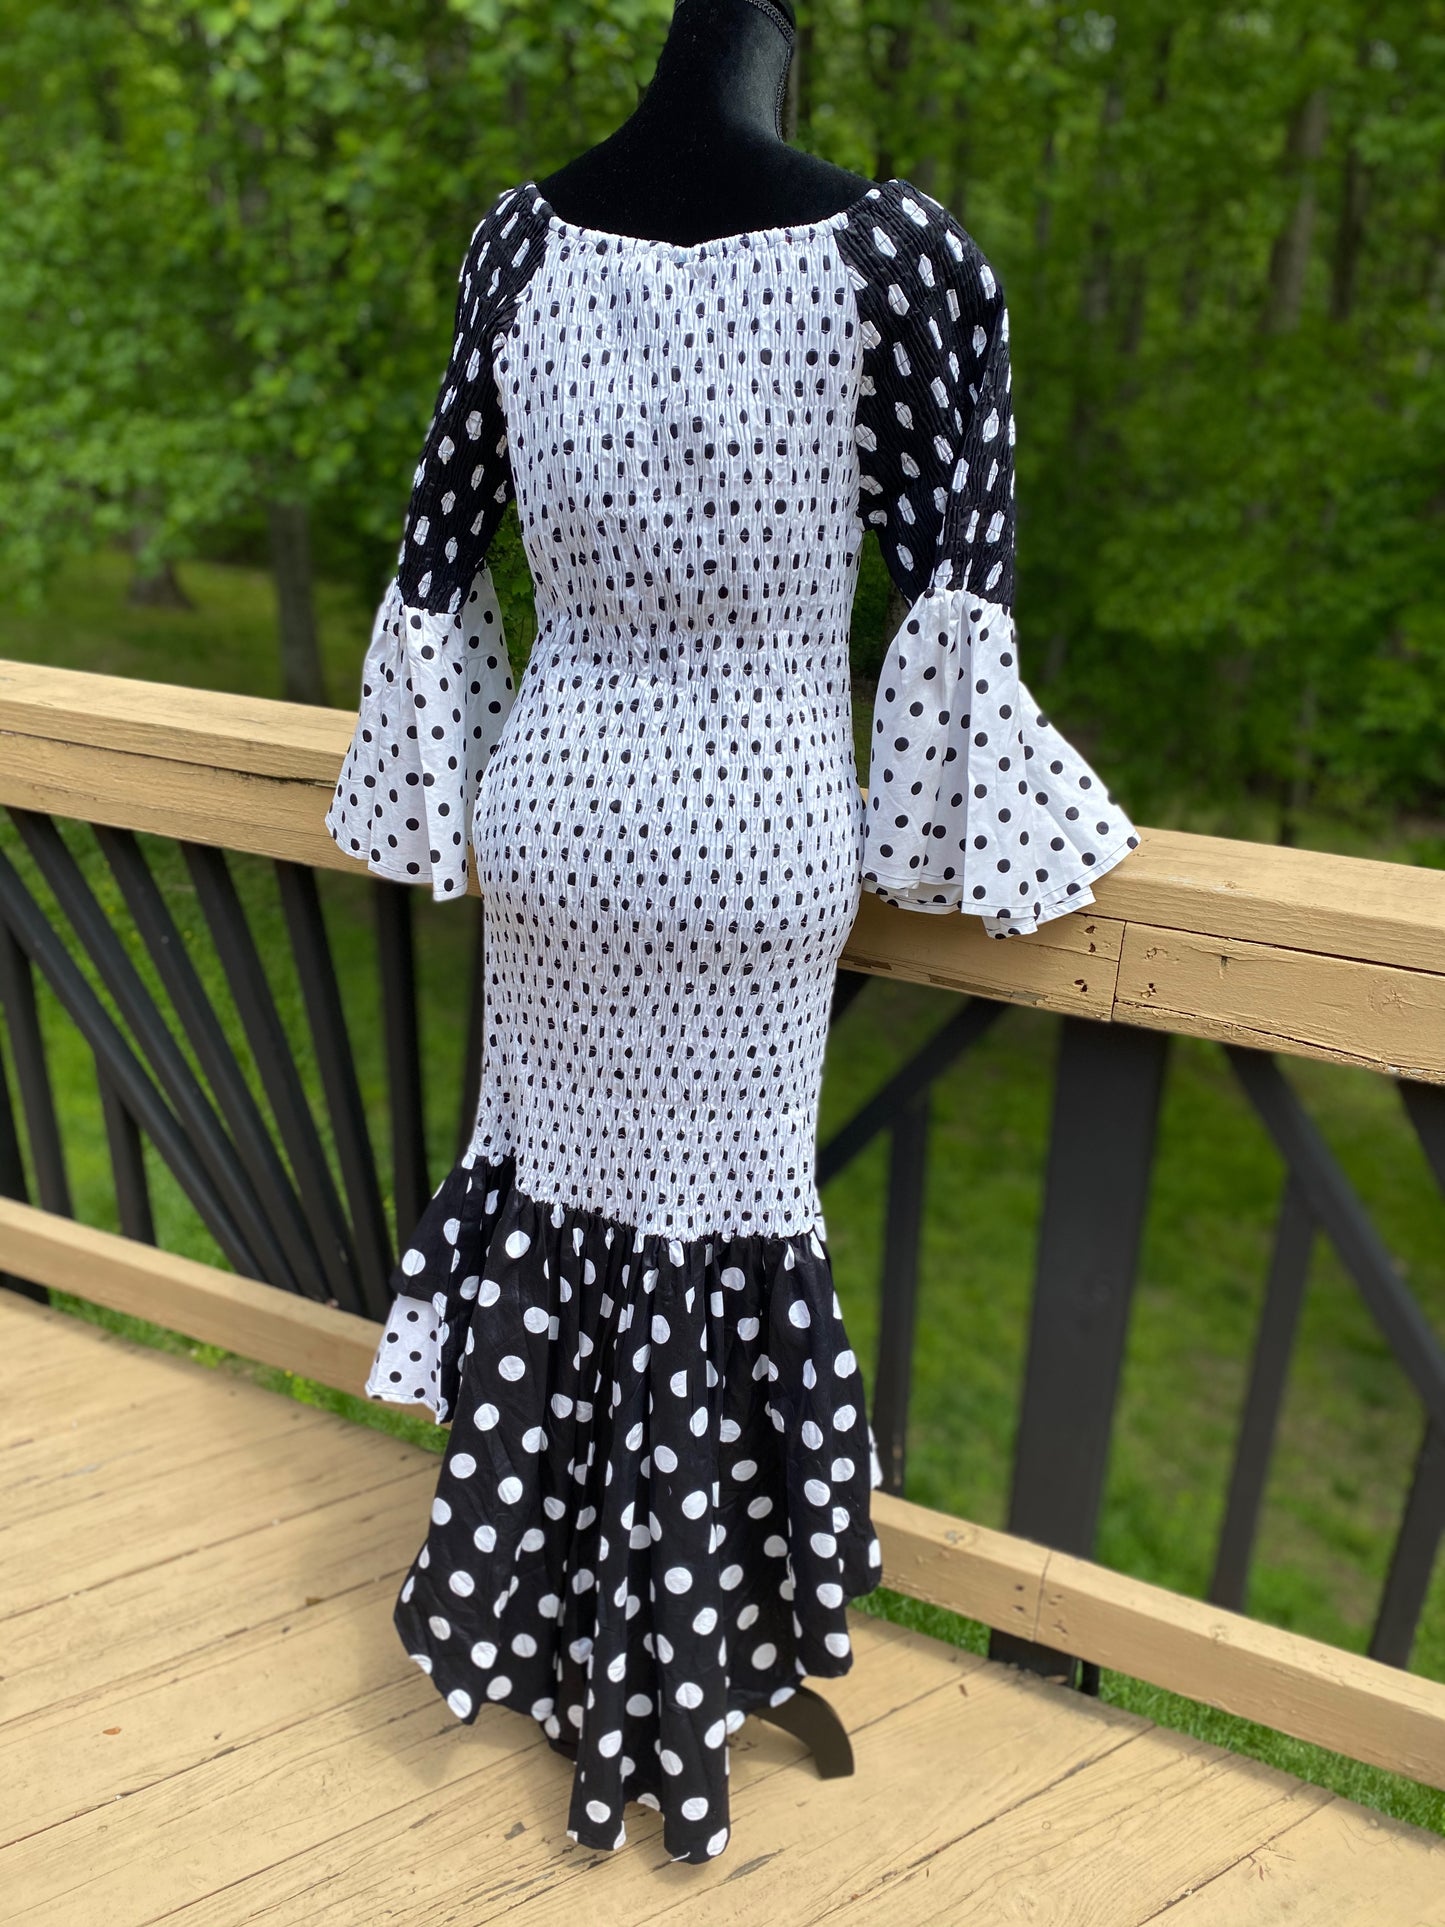 Black and White Polka Dot Hi-lo Dress w/Headwrap (One Size)